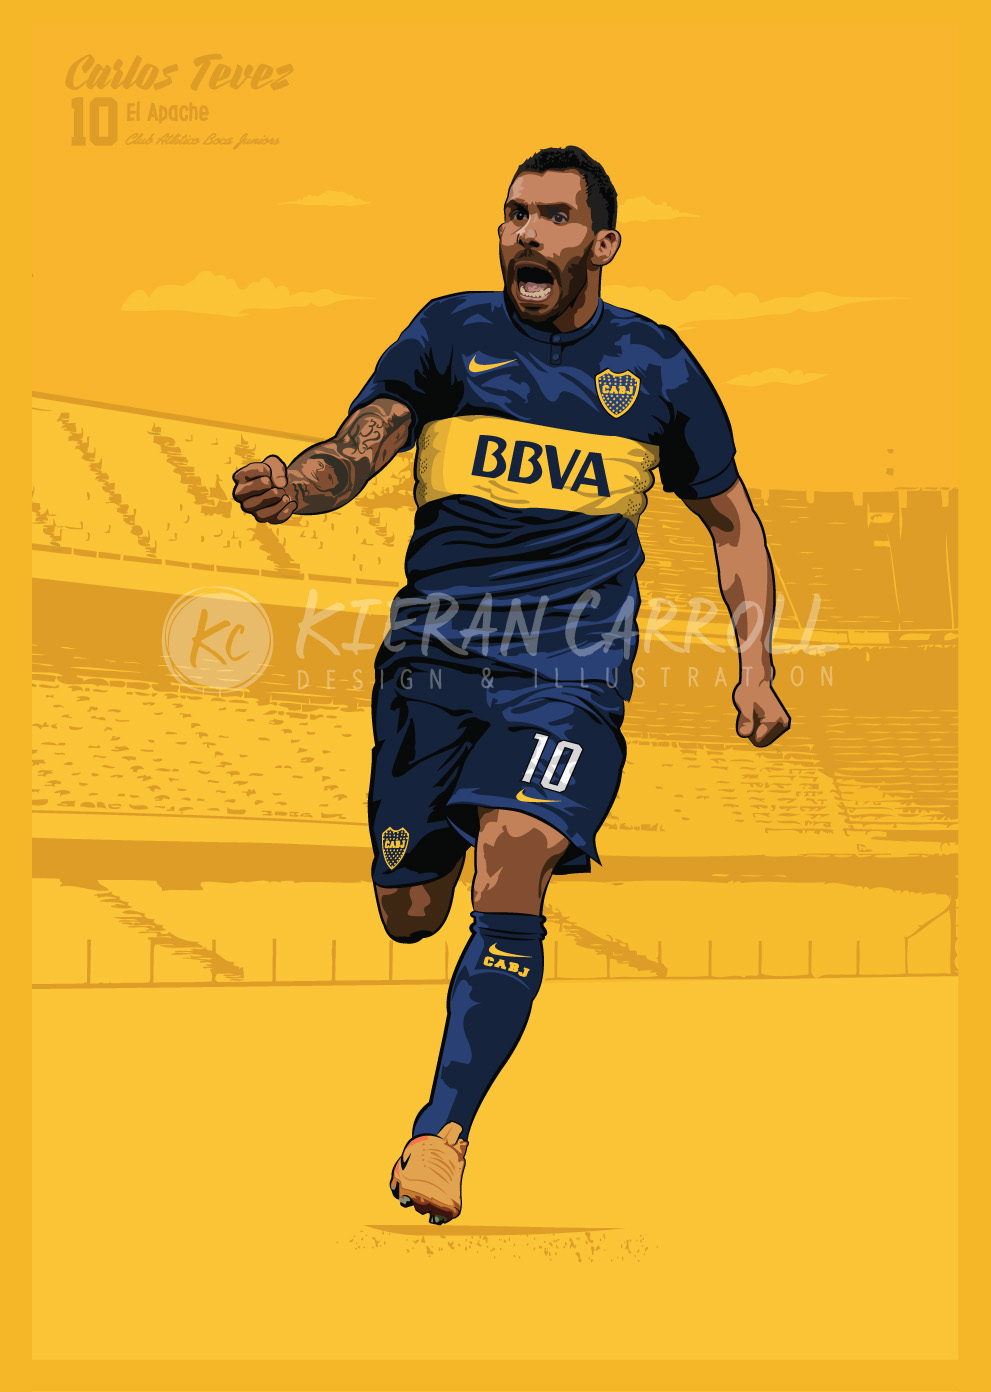 Carlos Tevez - Boca Juniors Poster Art — Kieran Carroll Design